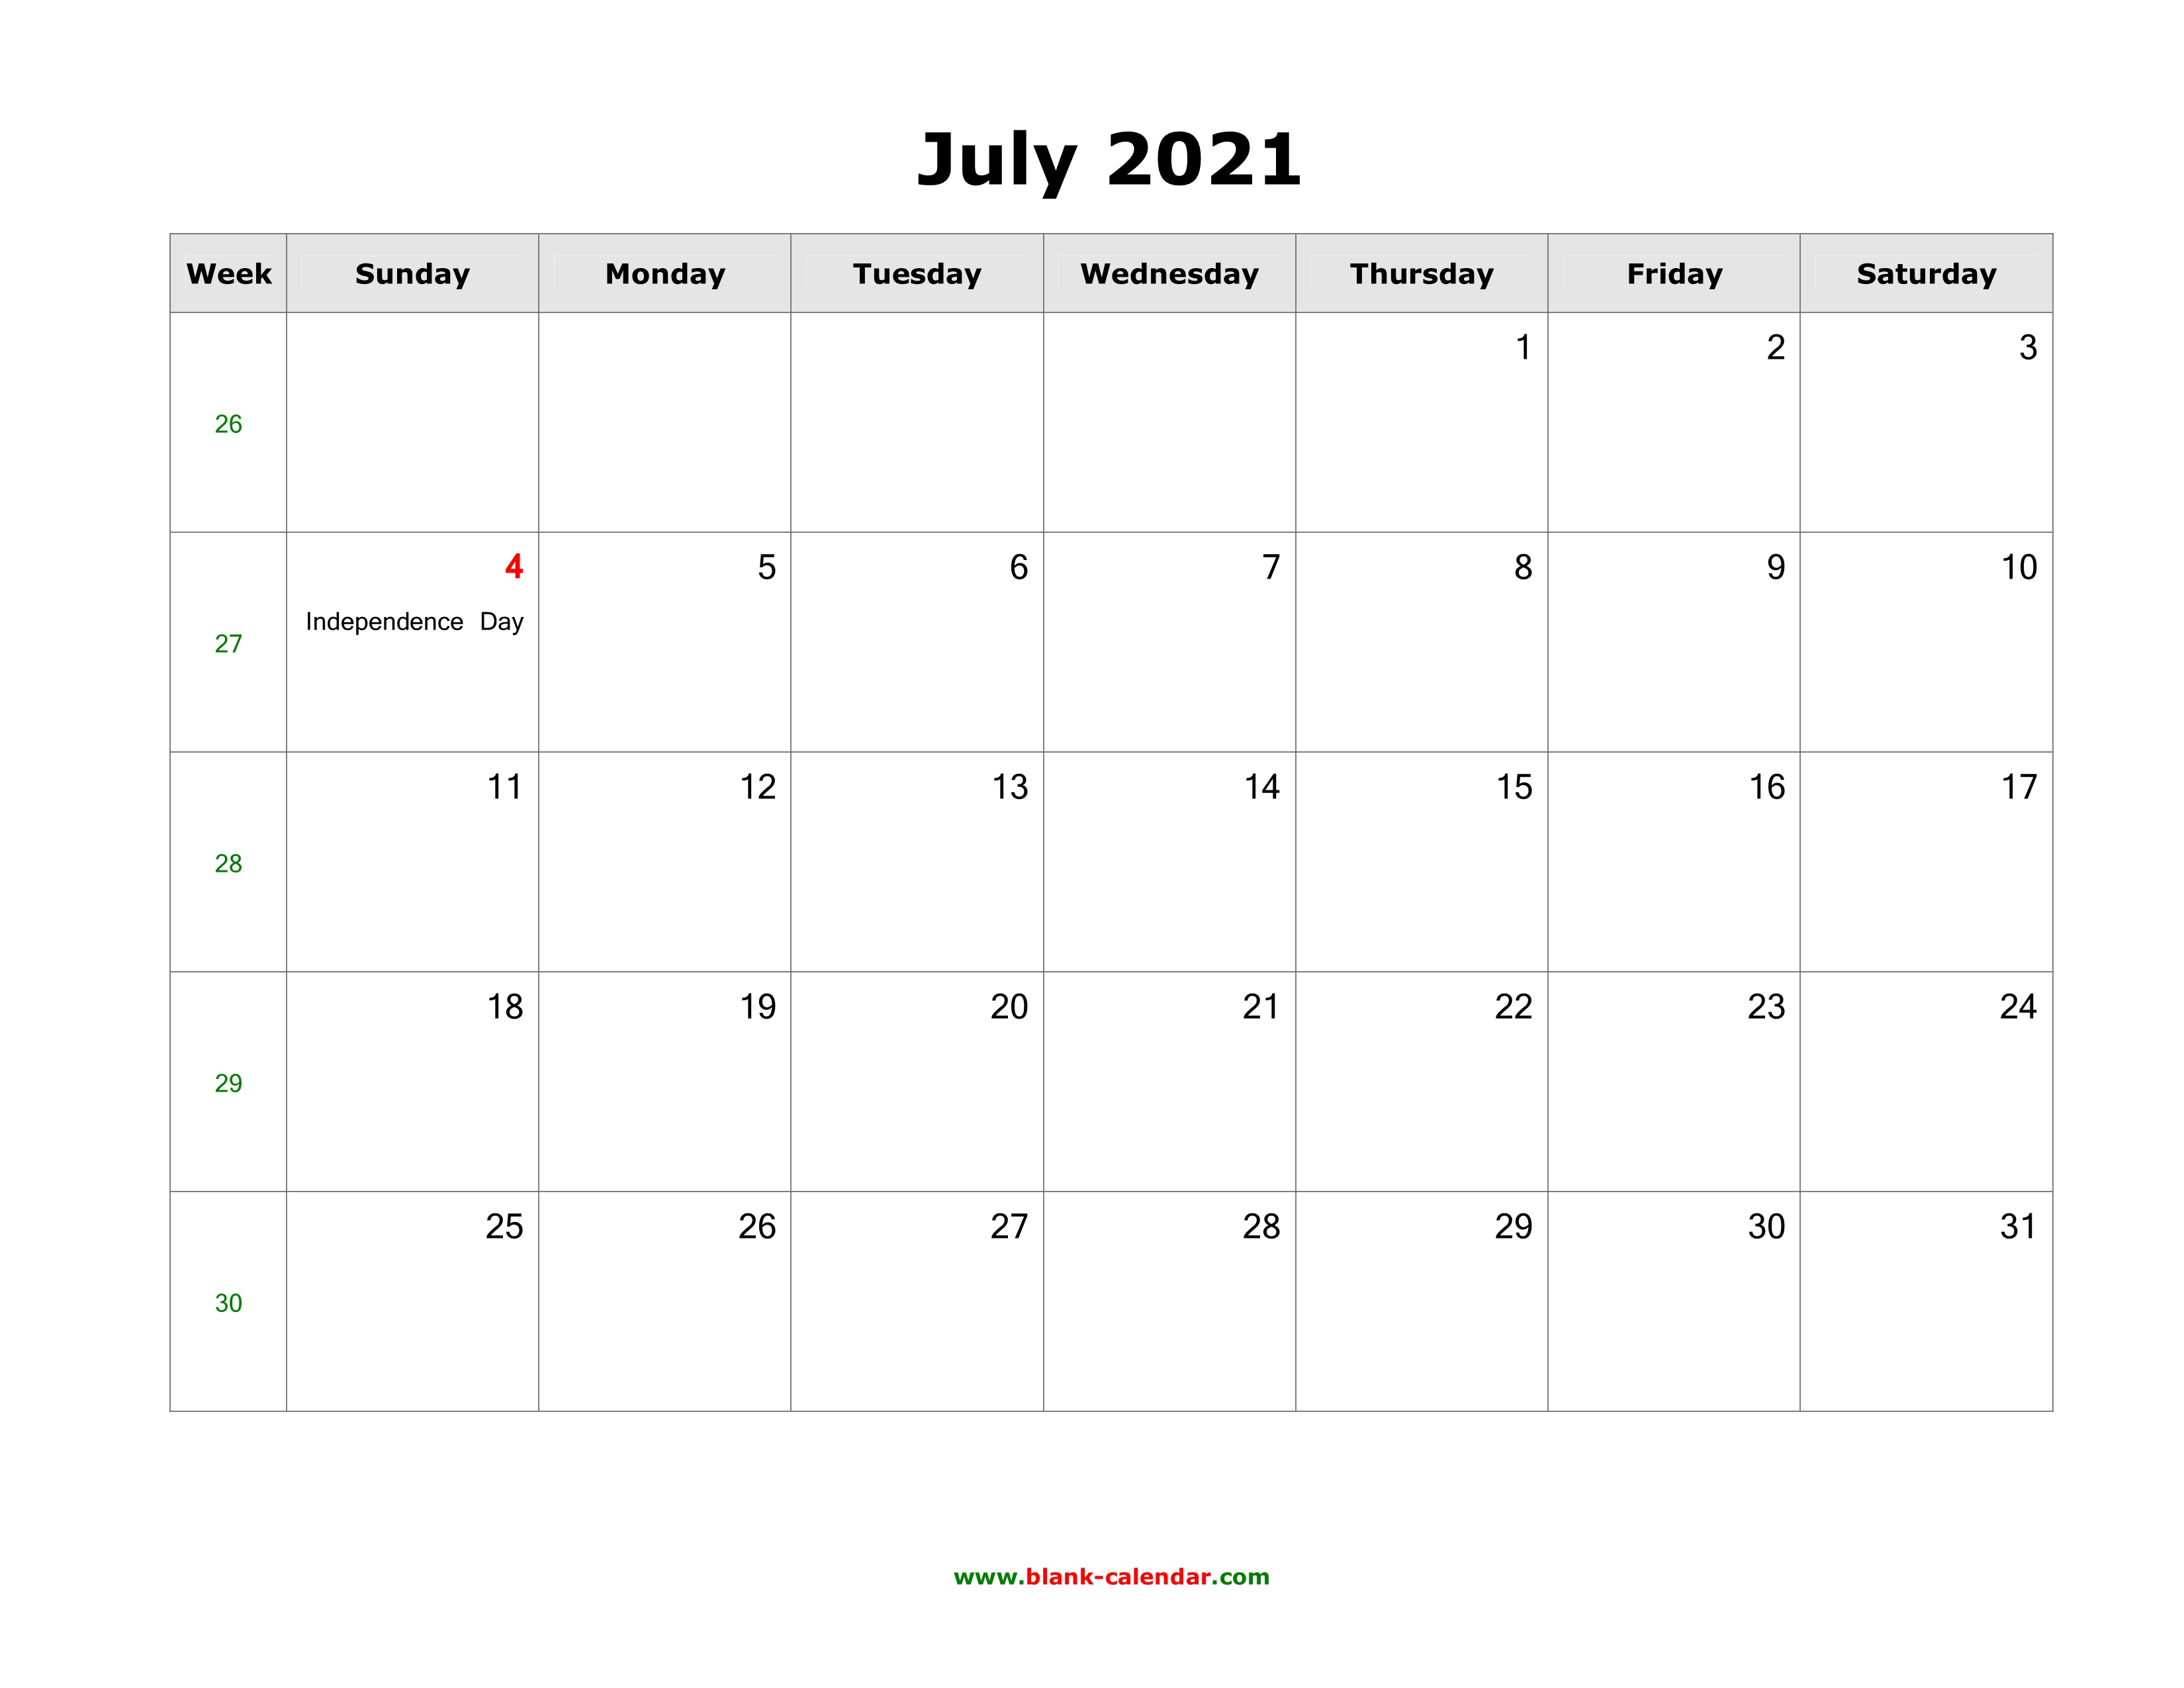 July 2021 Blank Calendar Free Download Calendar Templates